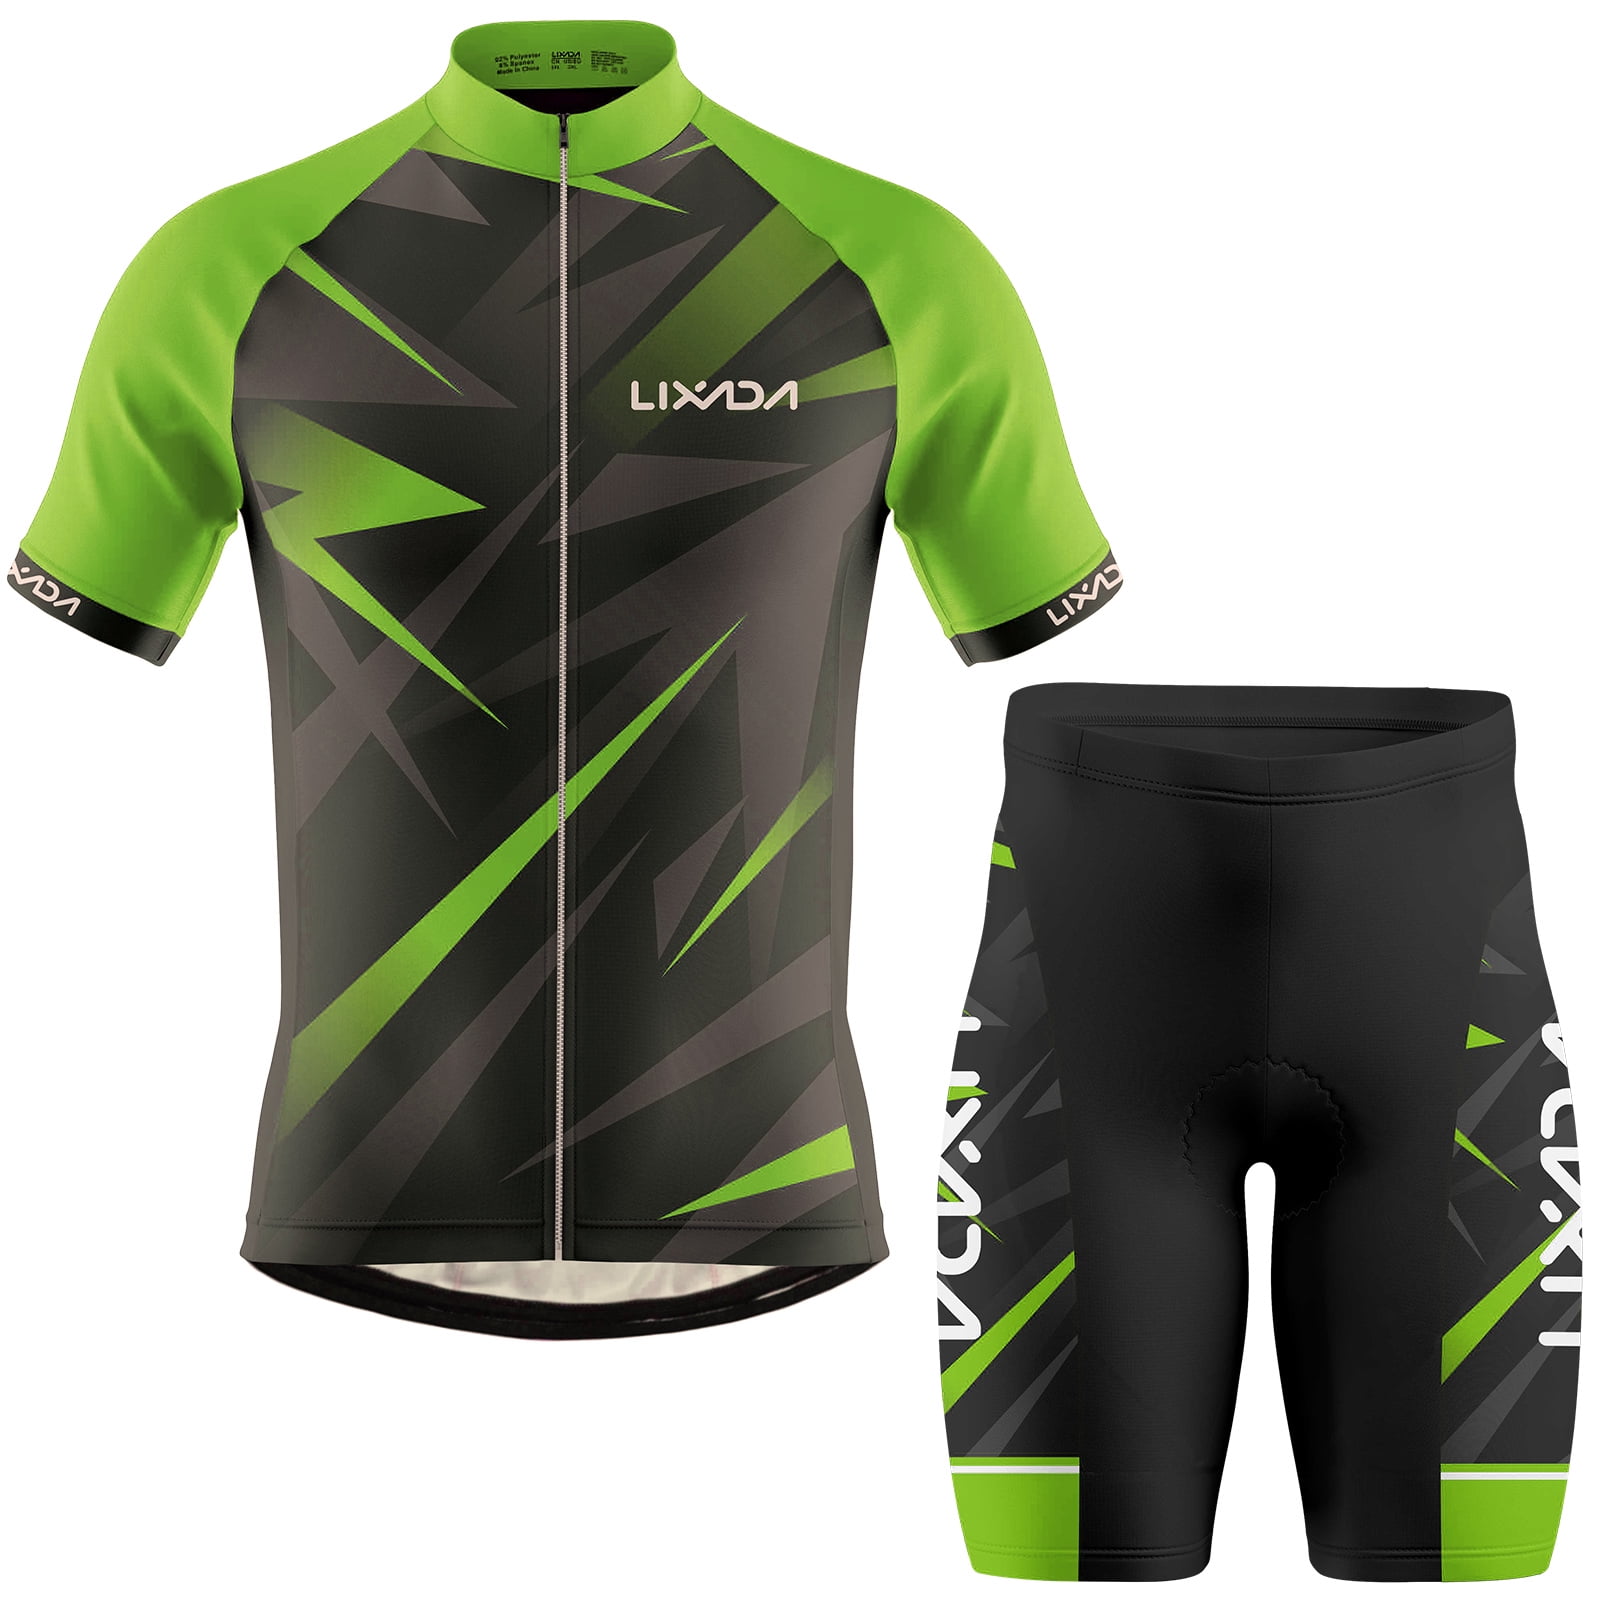 Merida Team Cycling Jersey Men's Reflective Bike Cycle Short Sleeve Jersey Shirt 